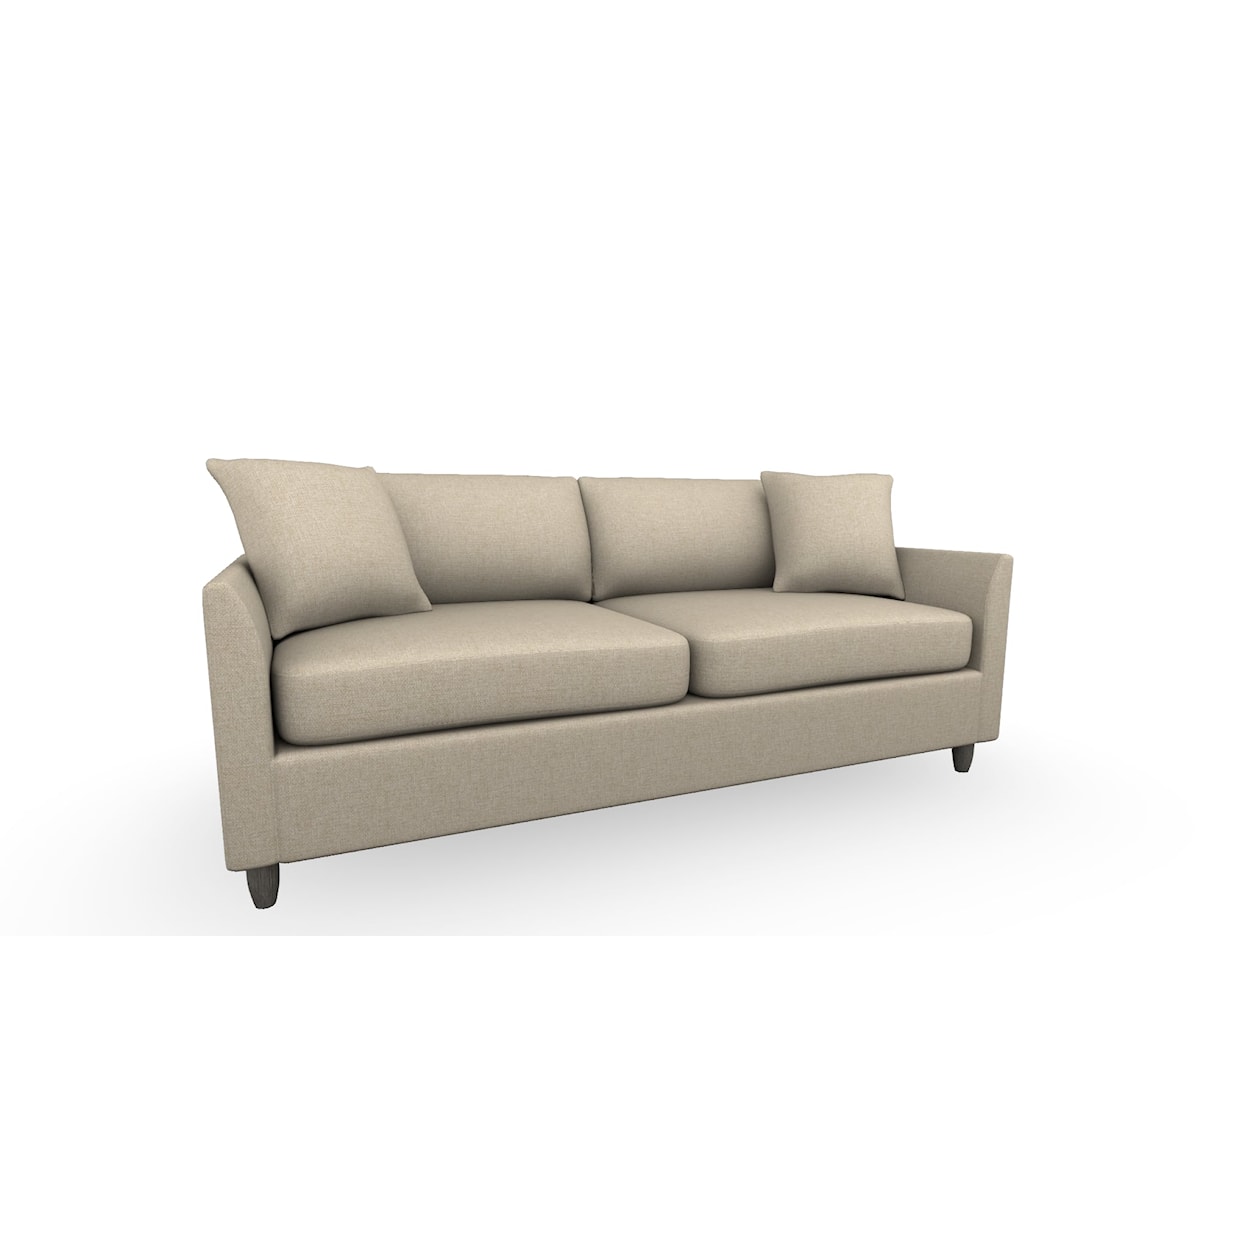 Bravo Furniture Bayment Full Memory Foam Stationary Sofa Sleeper